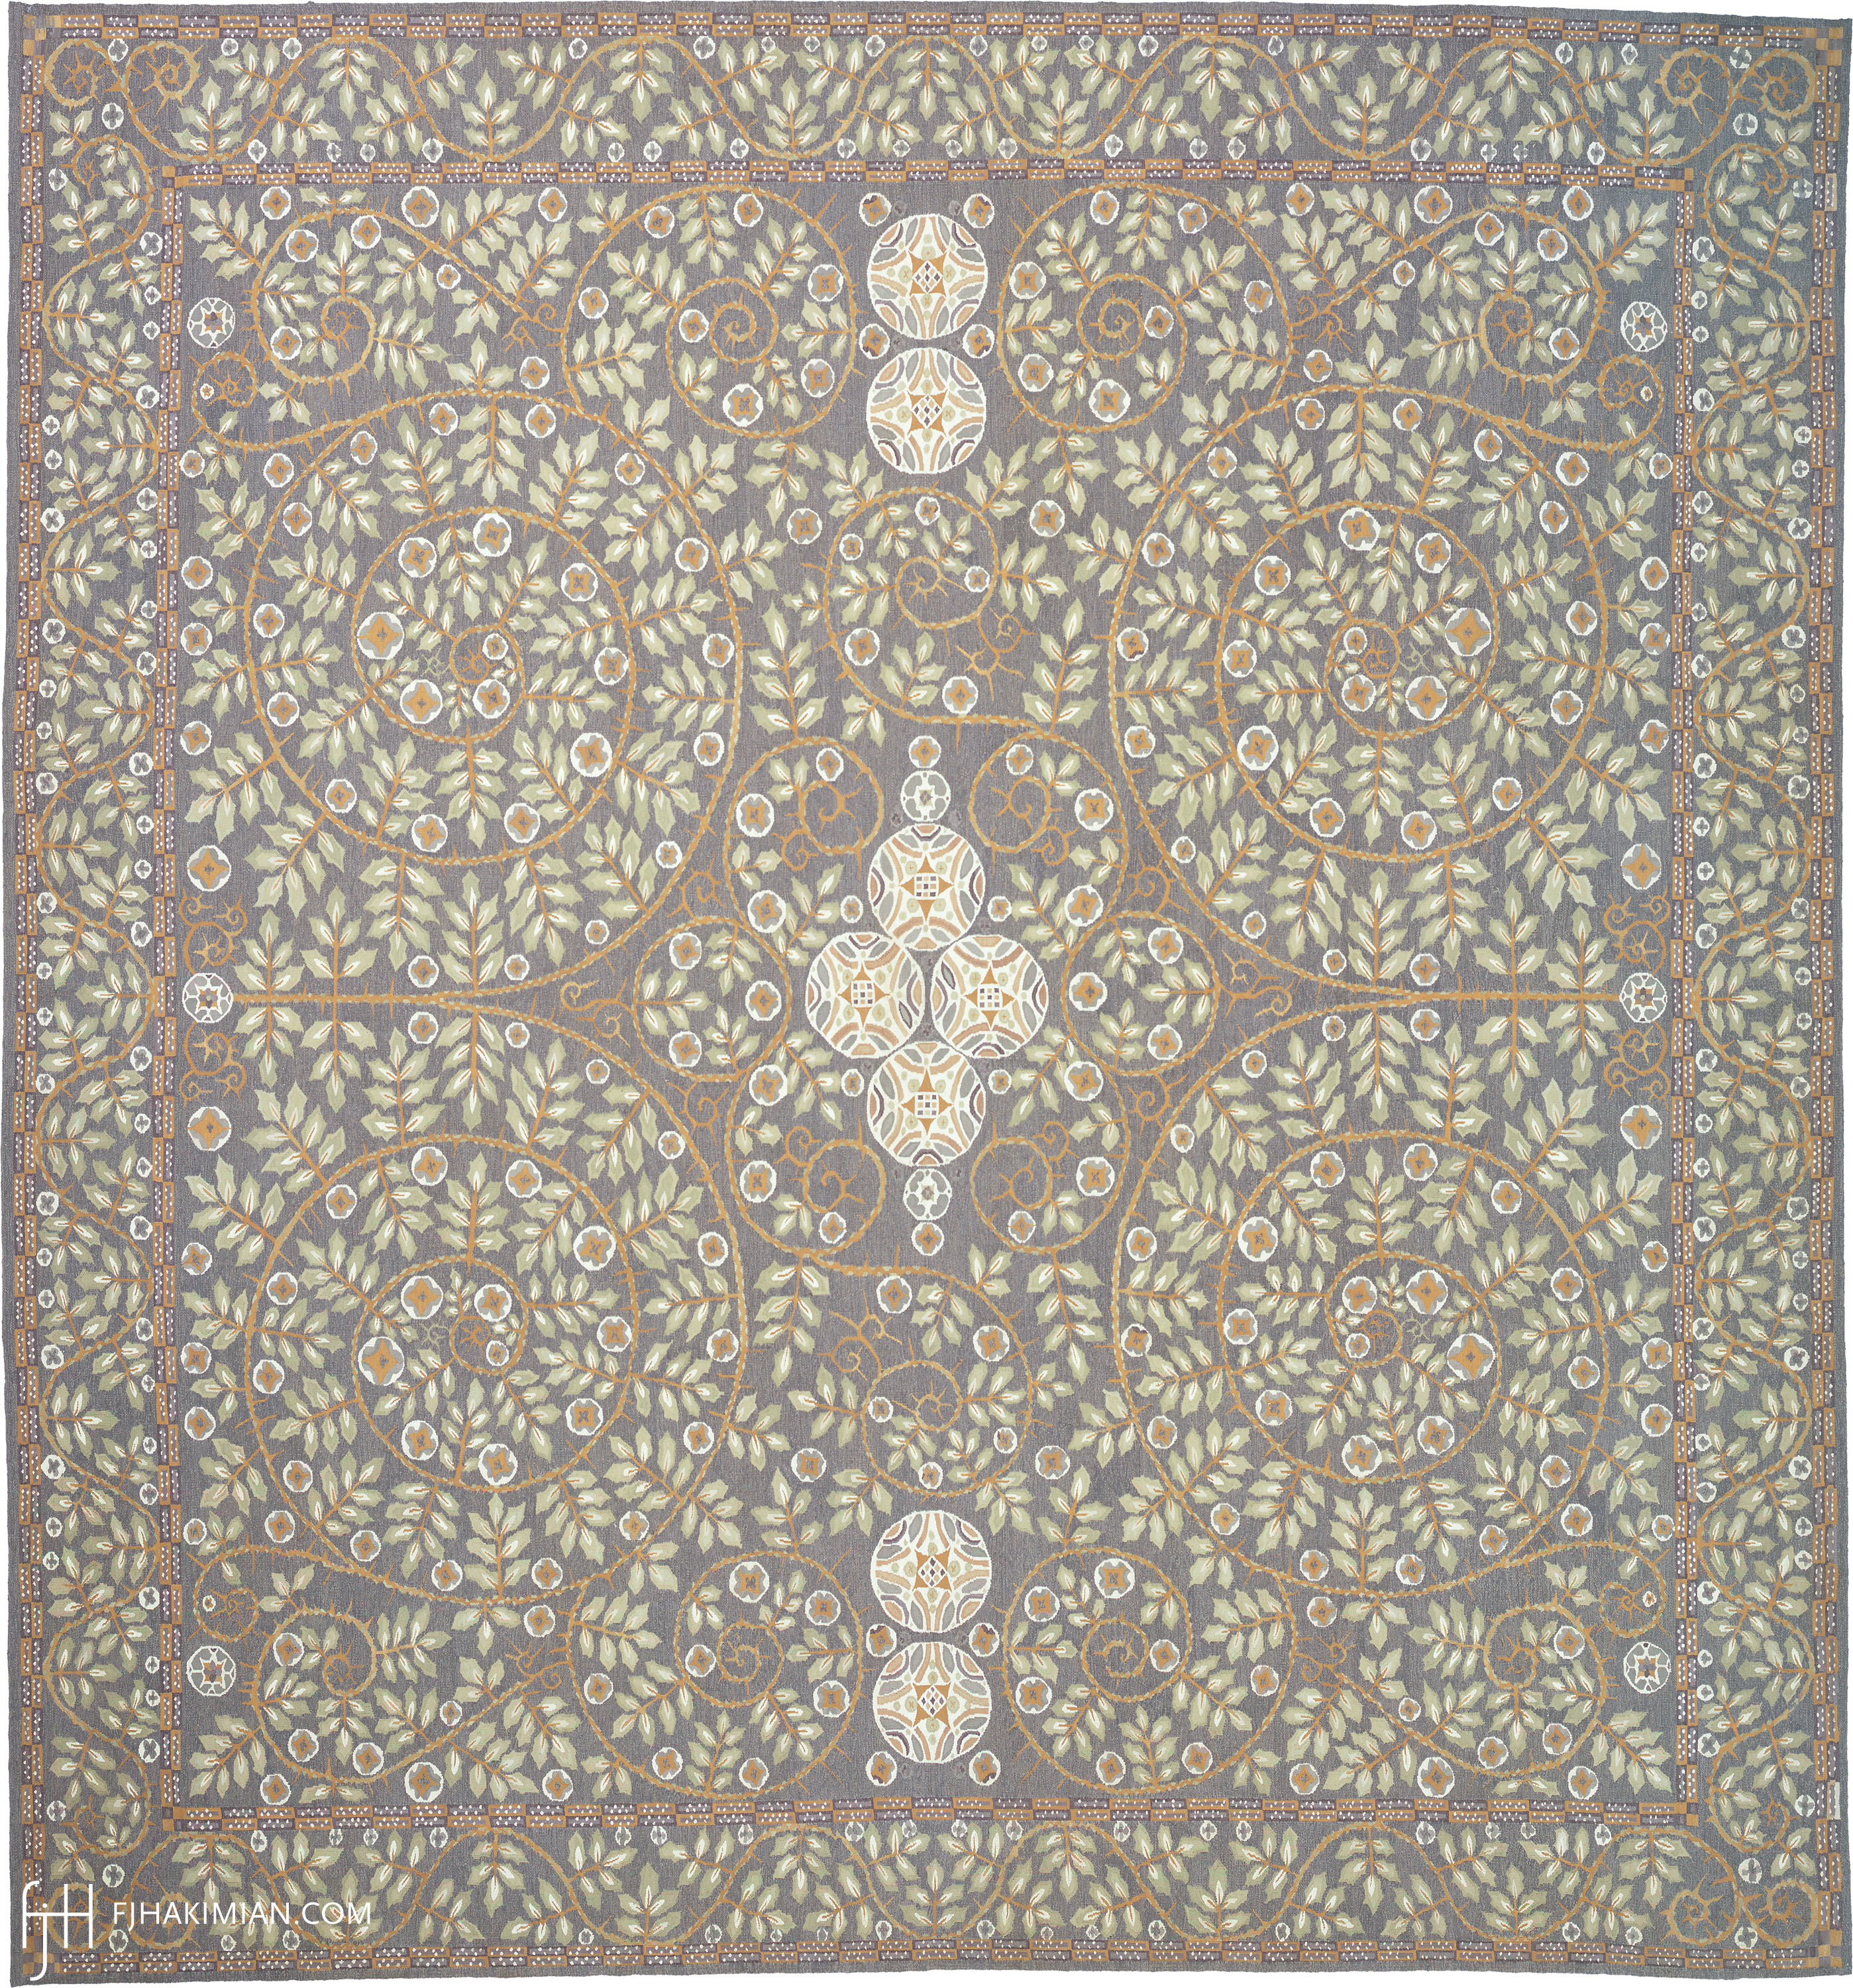 16655 WIENER WERKSTATTE DESIGN | Custom Modern & 20th Century Design Carpet | FJ Hakimian | Carpet Gallery in NYC